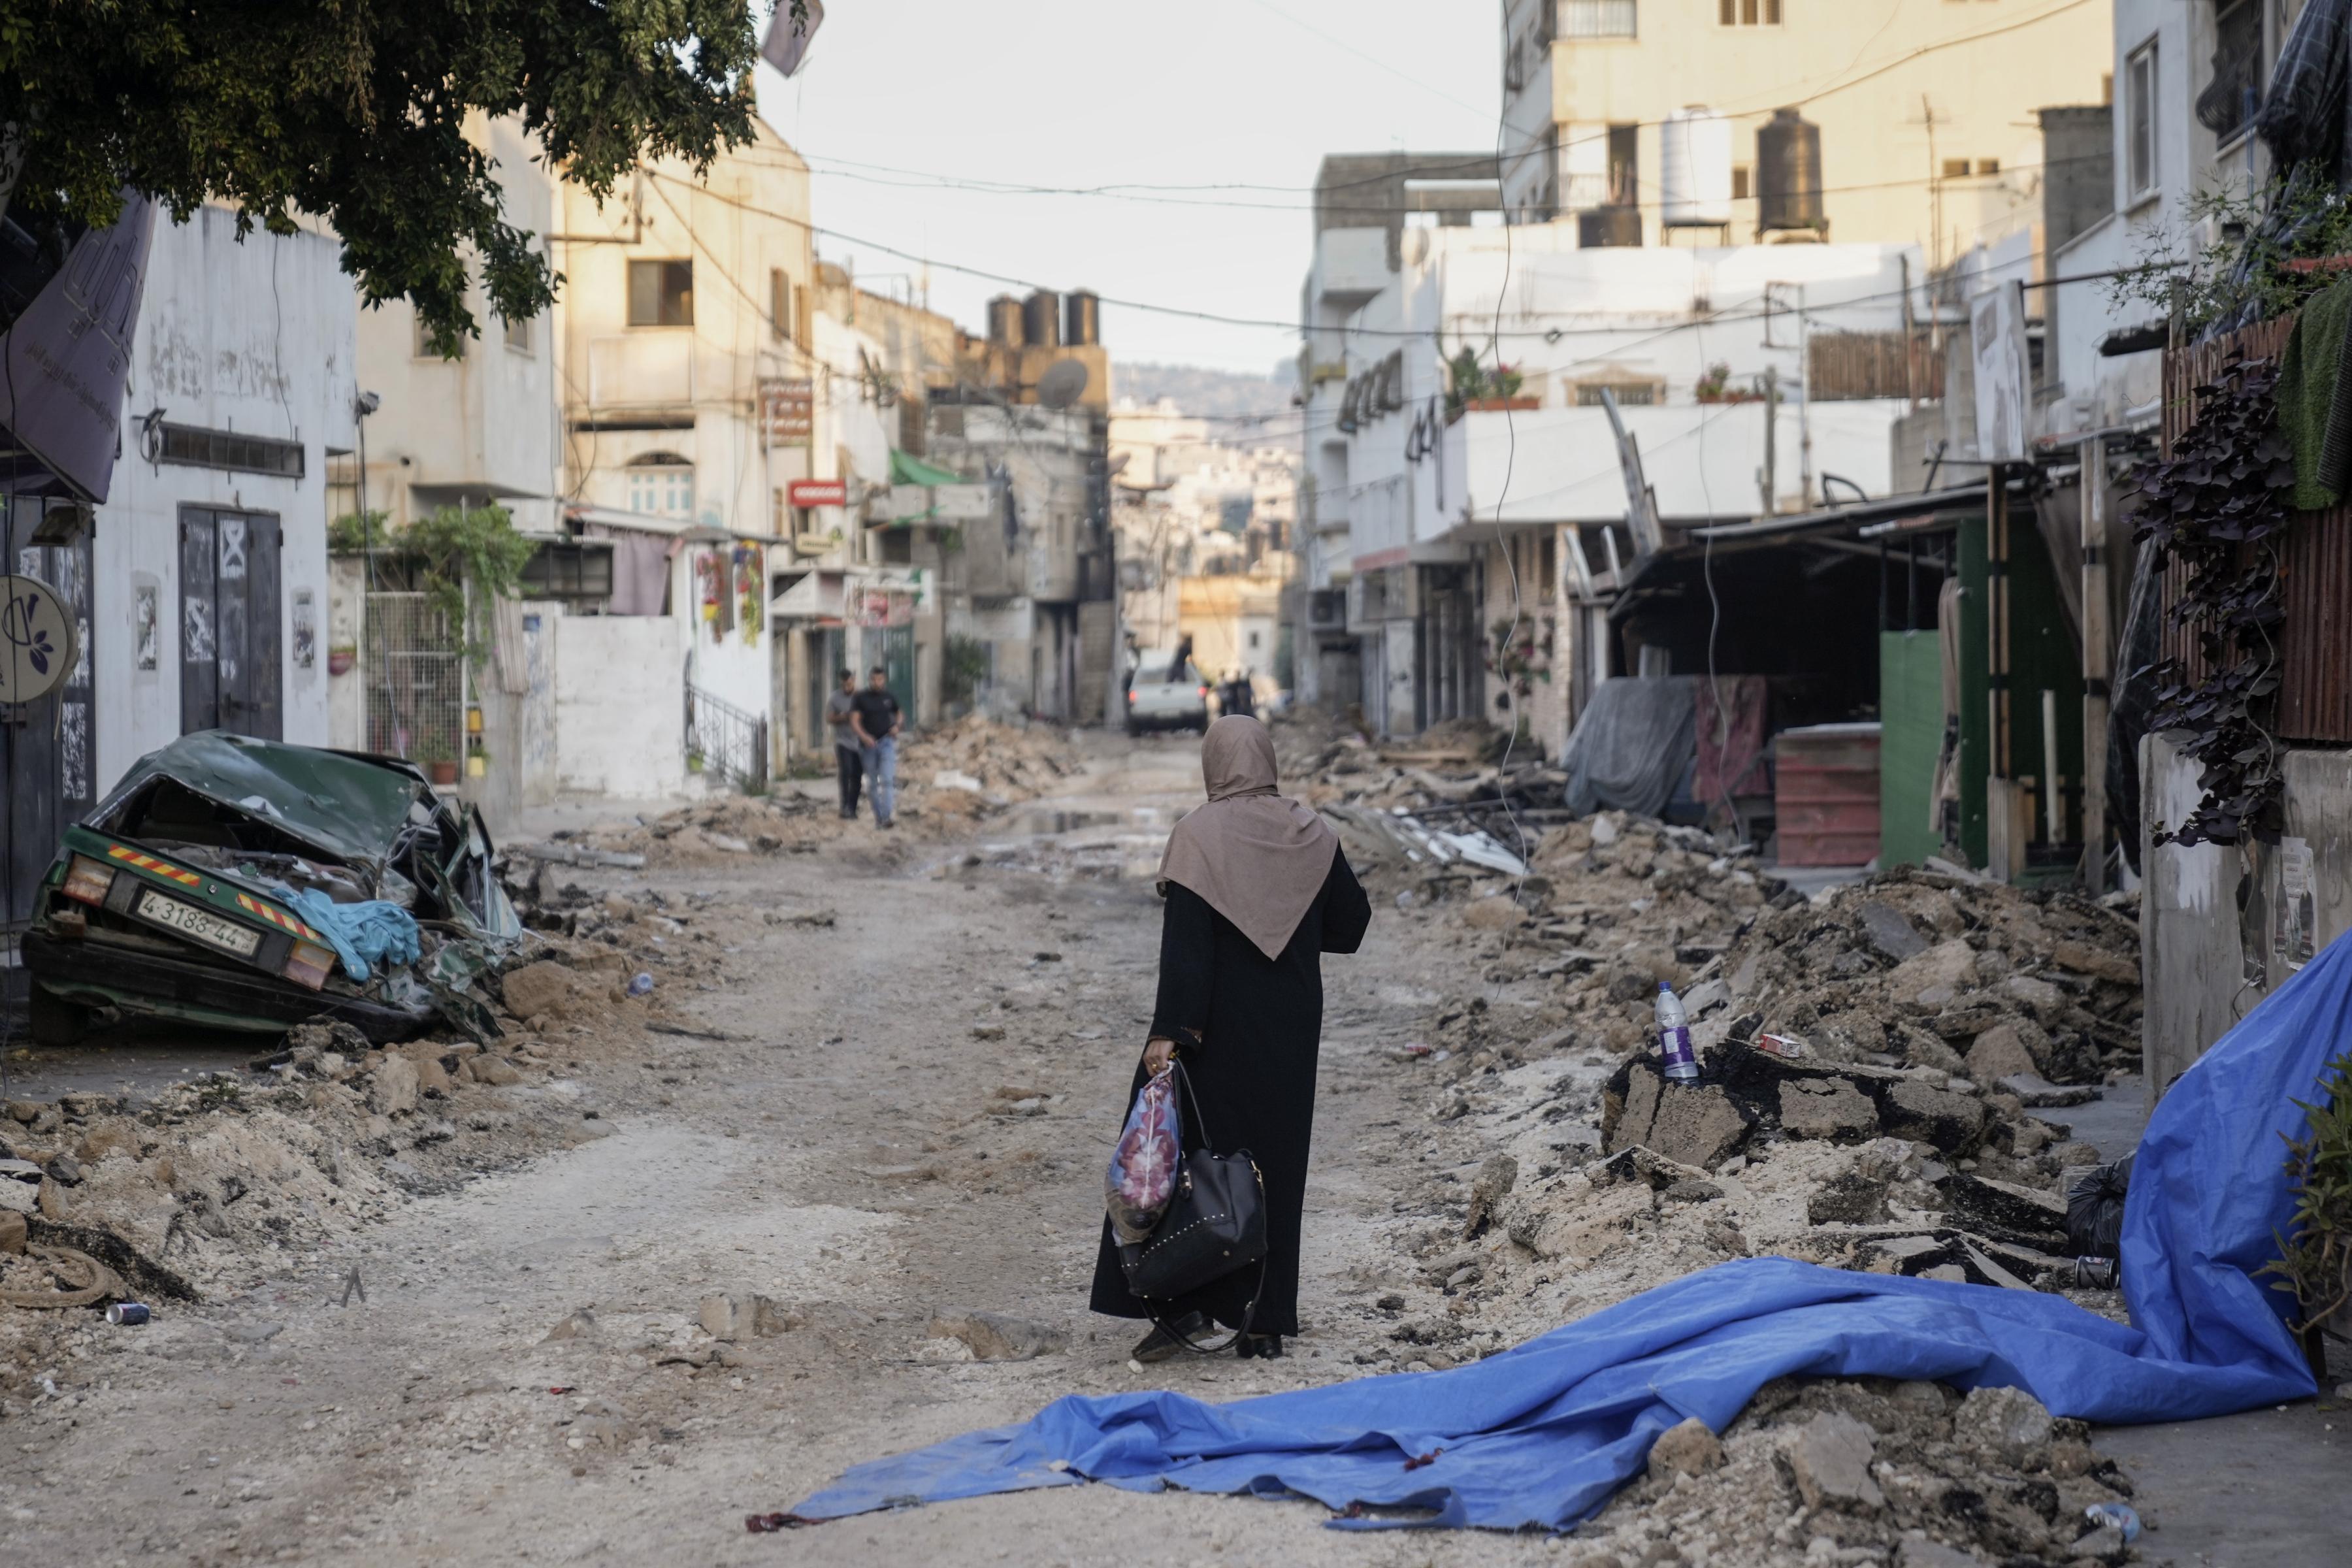 Palestinian woman in Jenin after Israeli invasion